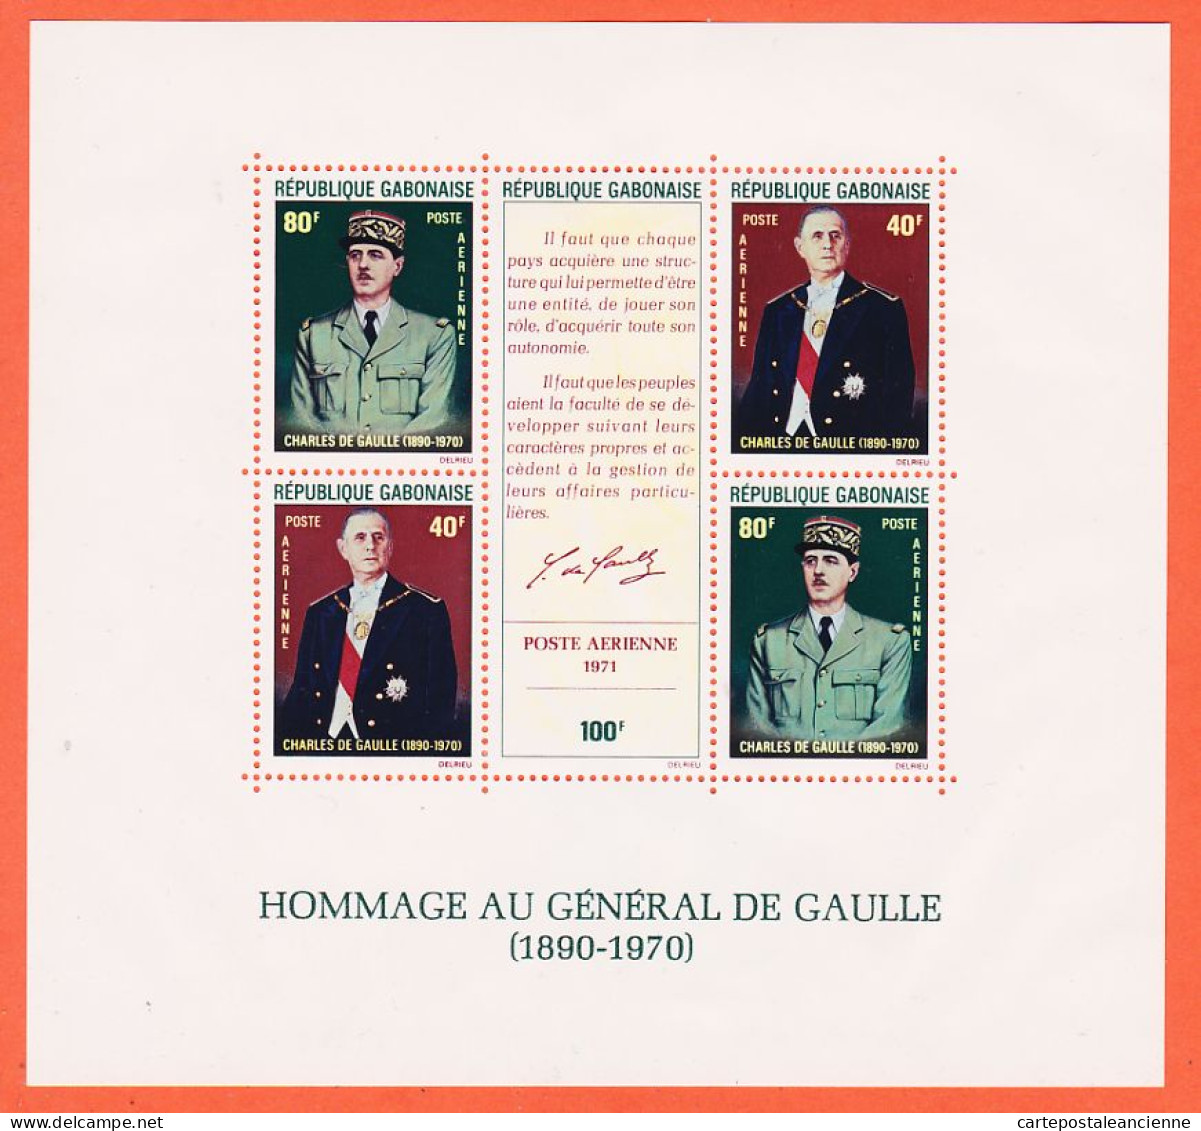 16514 / GABON Feuillet Bloc 5 Timbres Yvert Tellier Y-T P.A N° 17 Hommage Memorial Charles DE GAULLE 1971 Luxe MNH** - Gabon (1960-...)